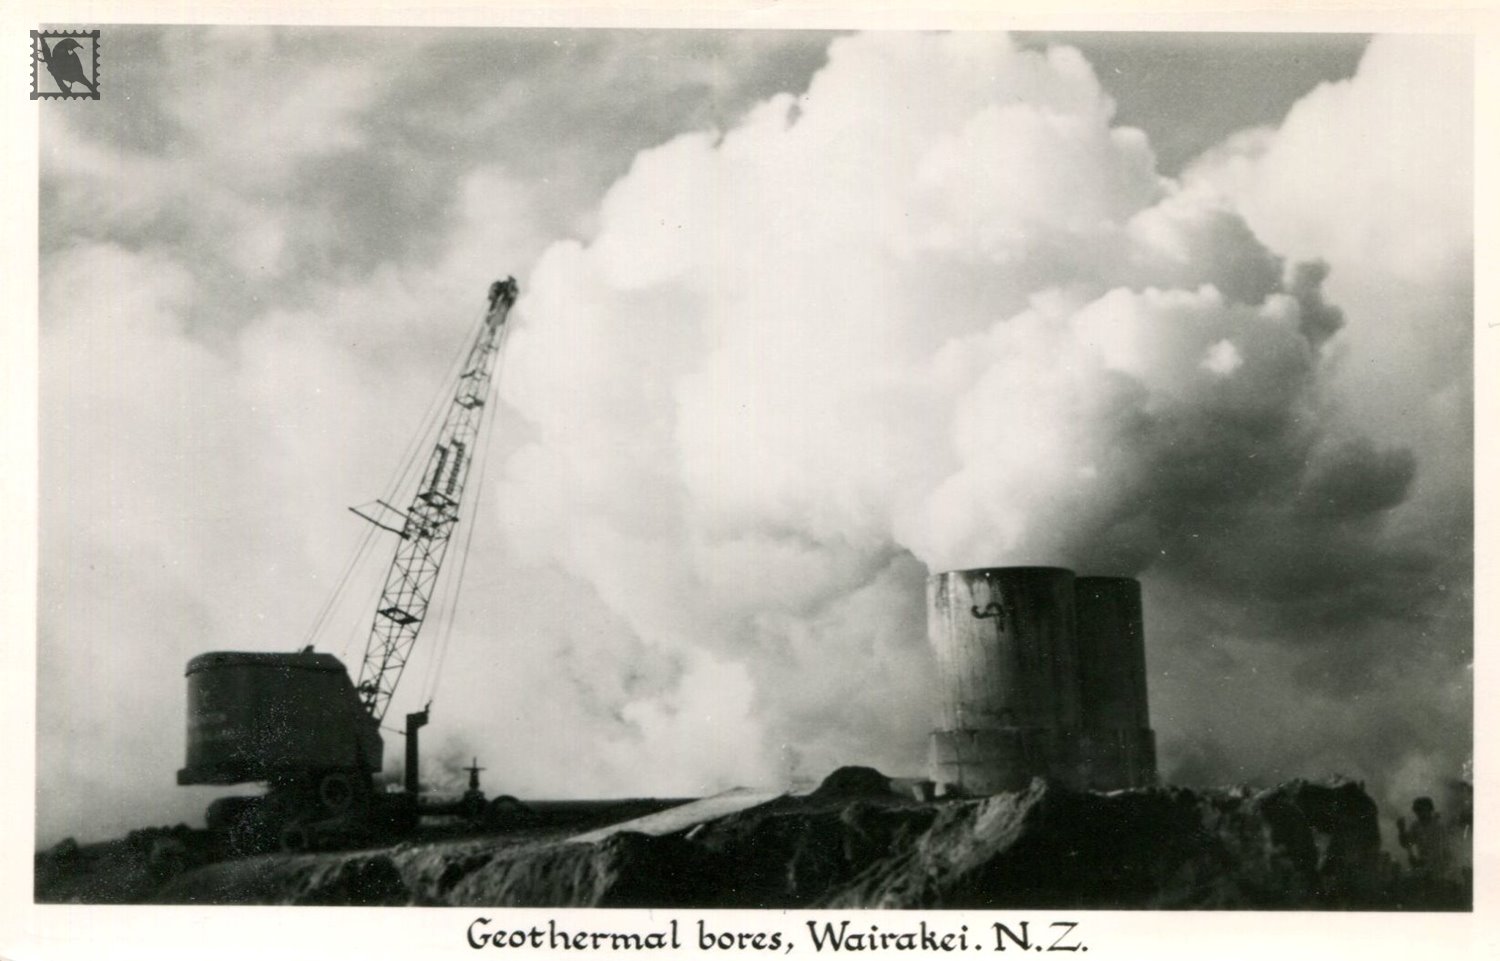 Geothermal Bores at Wairakei